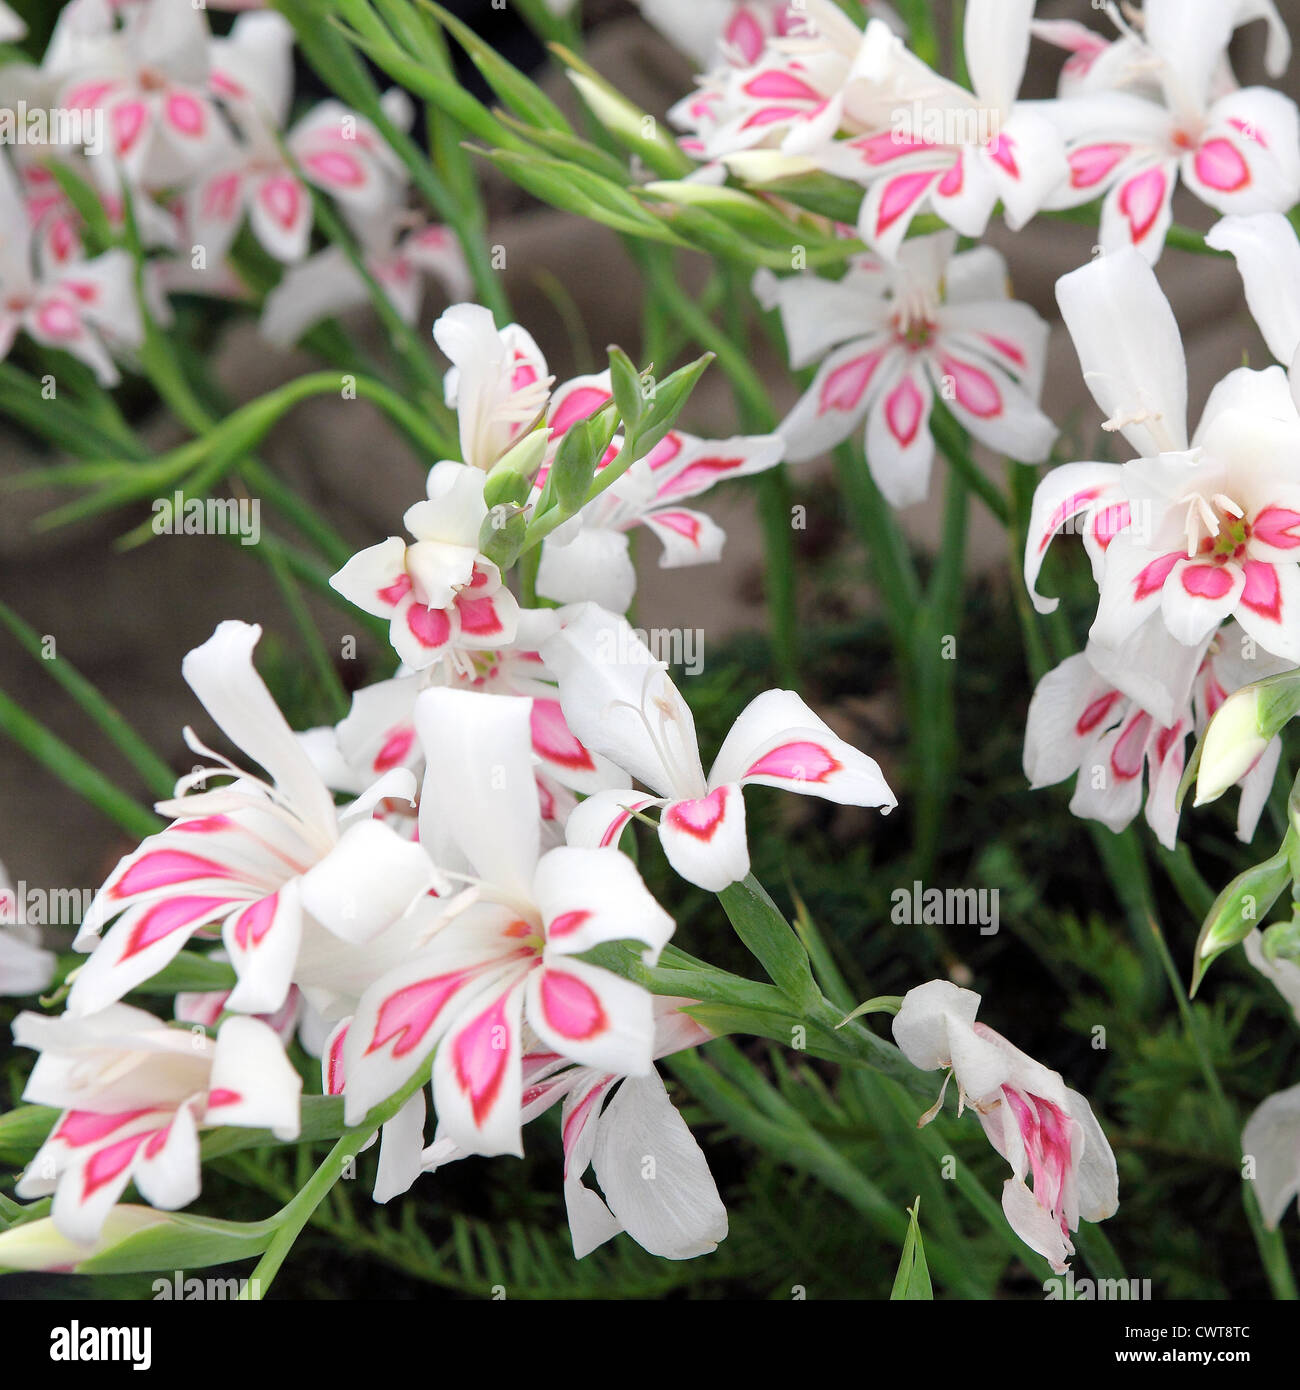 Wonderful example of Gladioli Nanus Nymph flowering plants. Stock Photo